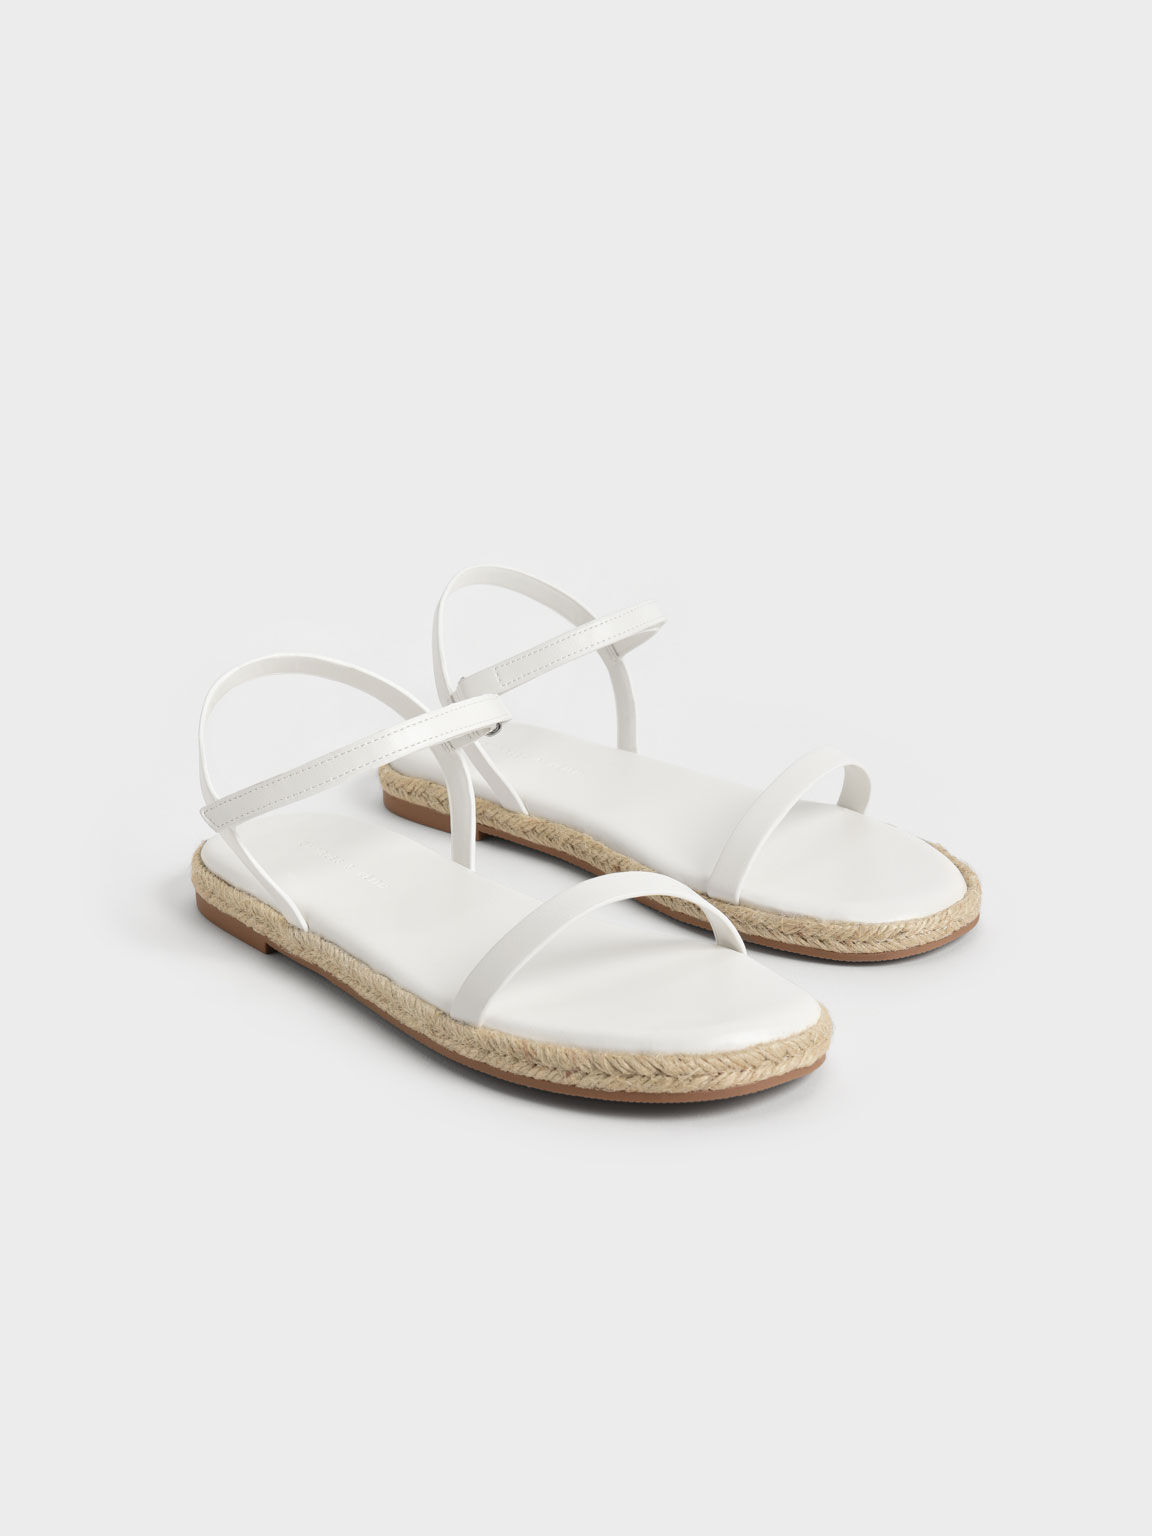 Sandal Flat Espadrille Ankle-Strap, White, hi-res